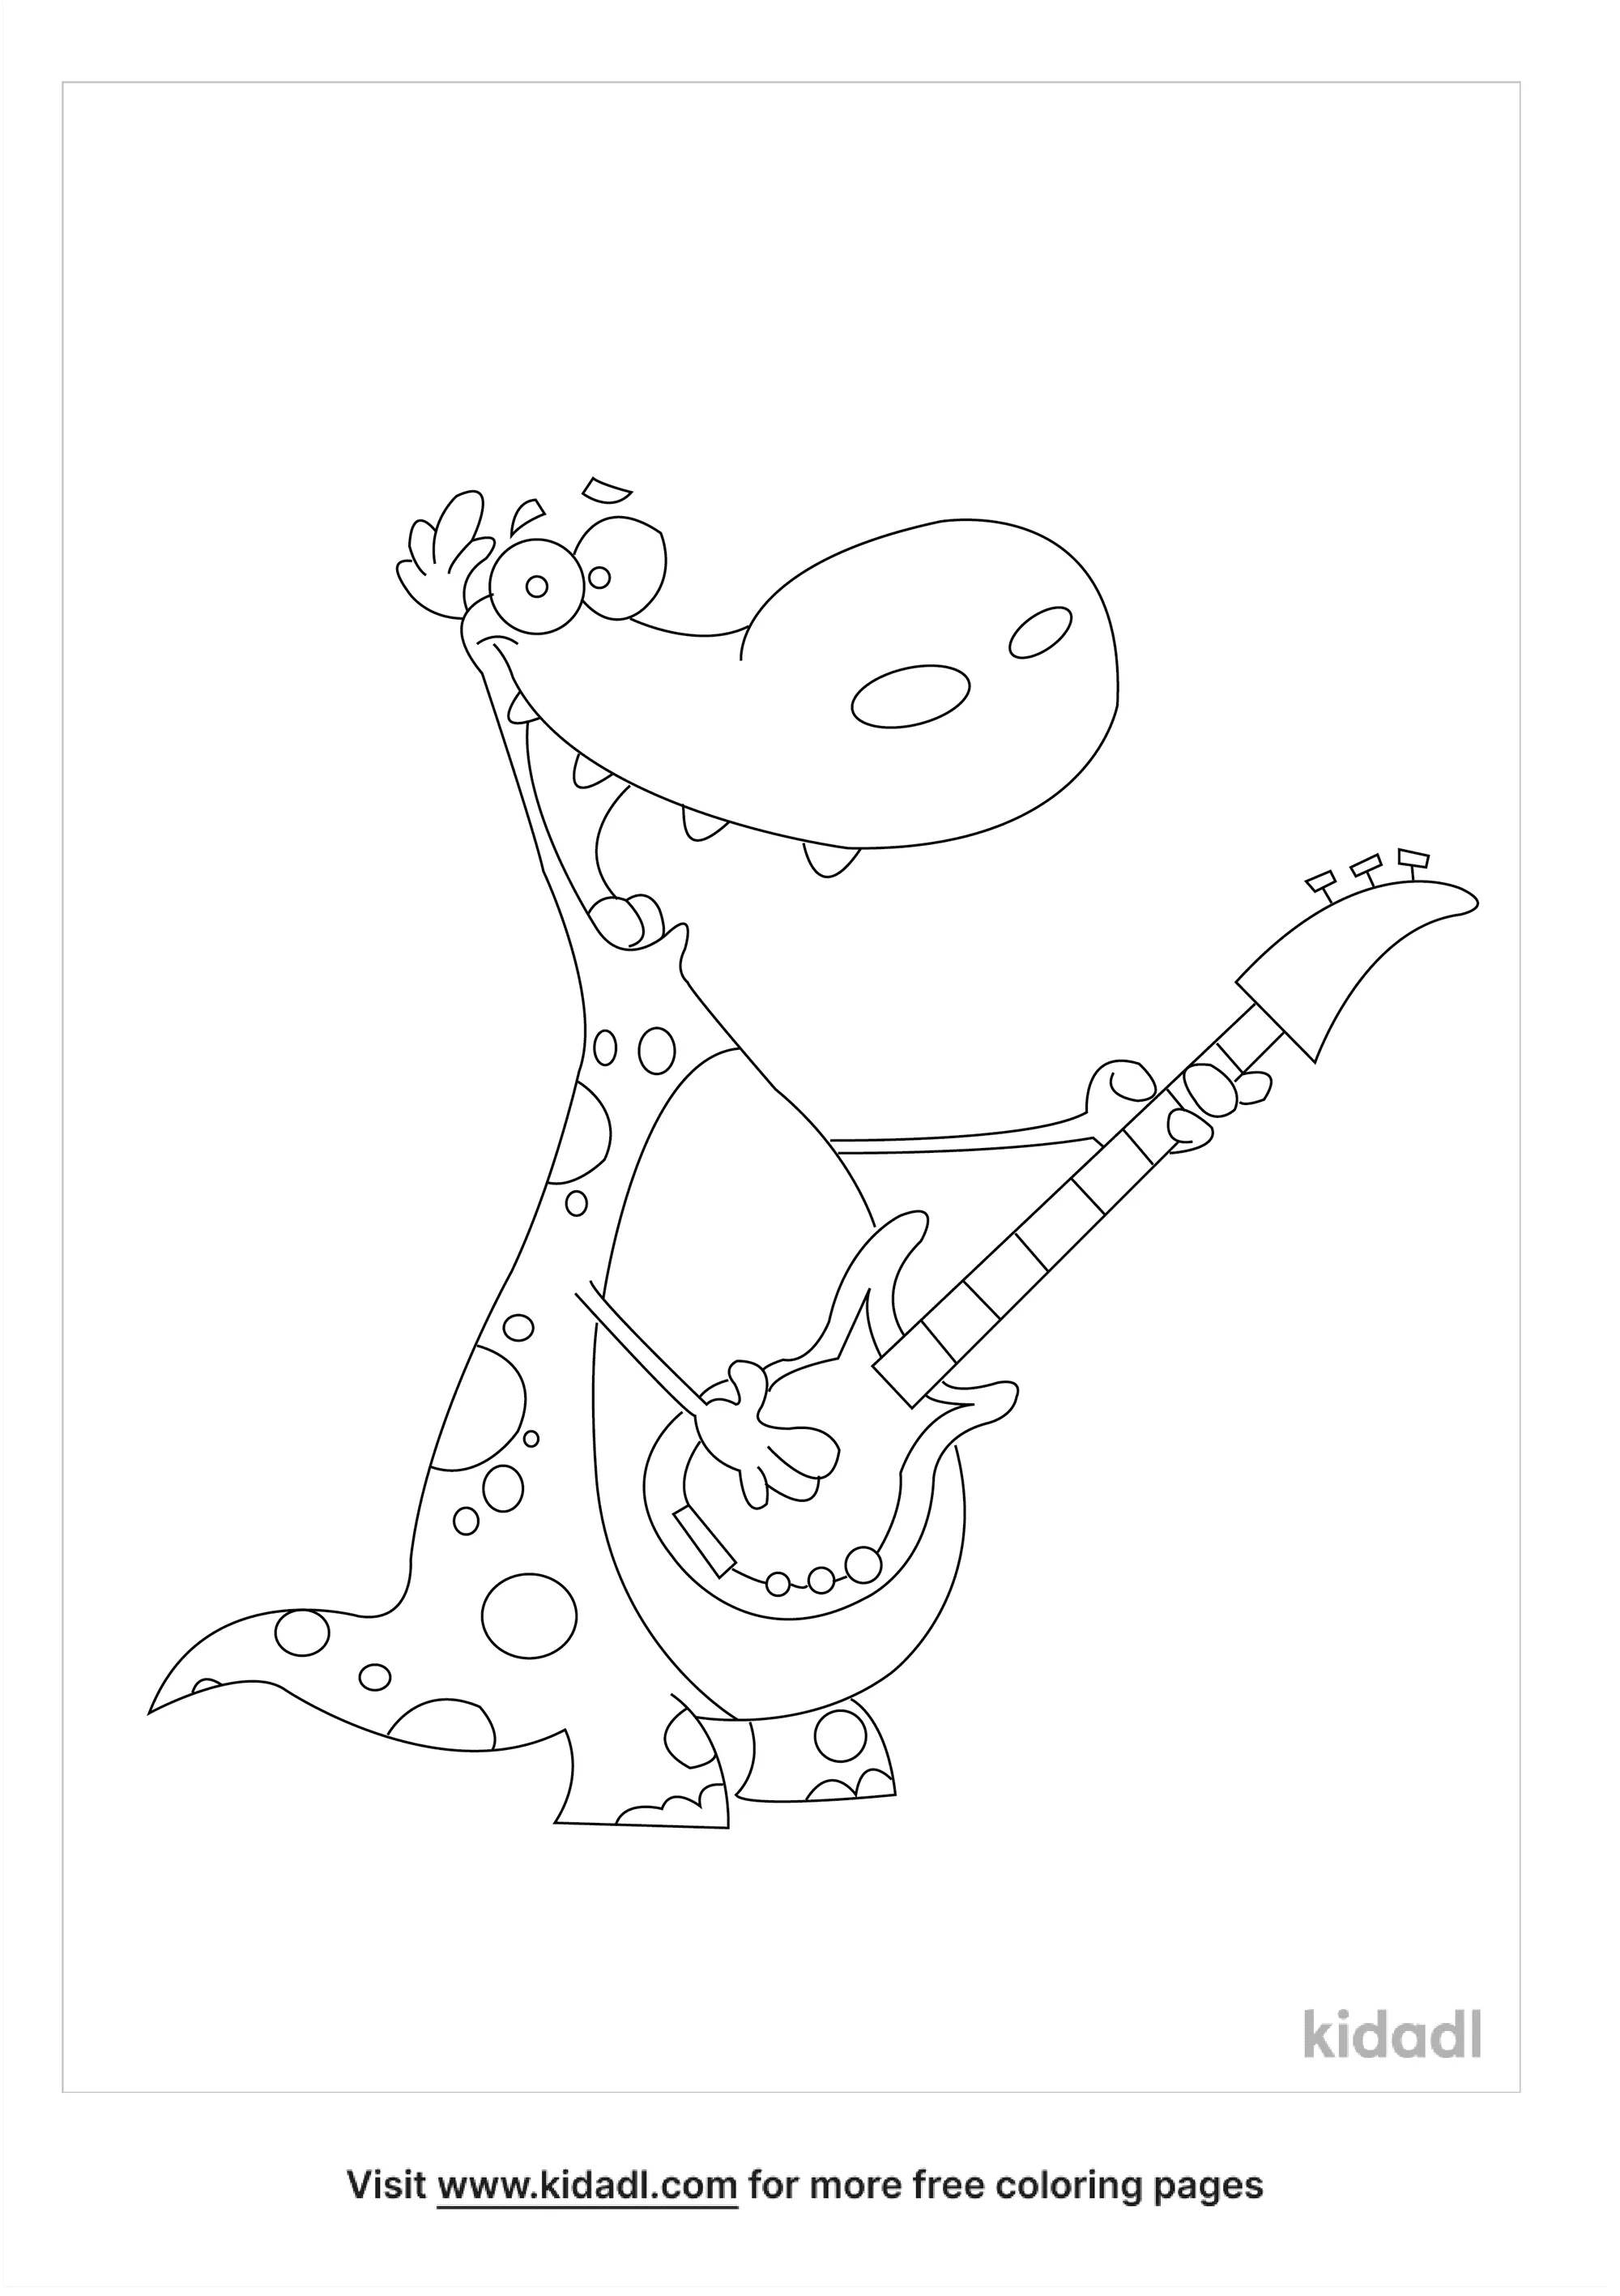 Dinosaur Playing Guitar Coloring Page